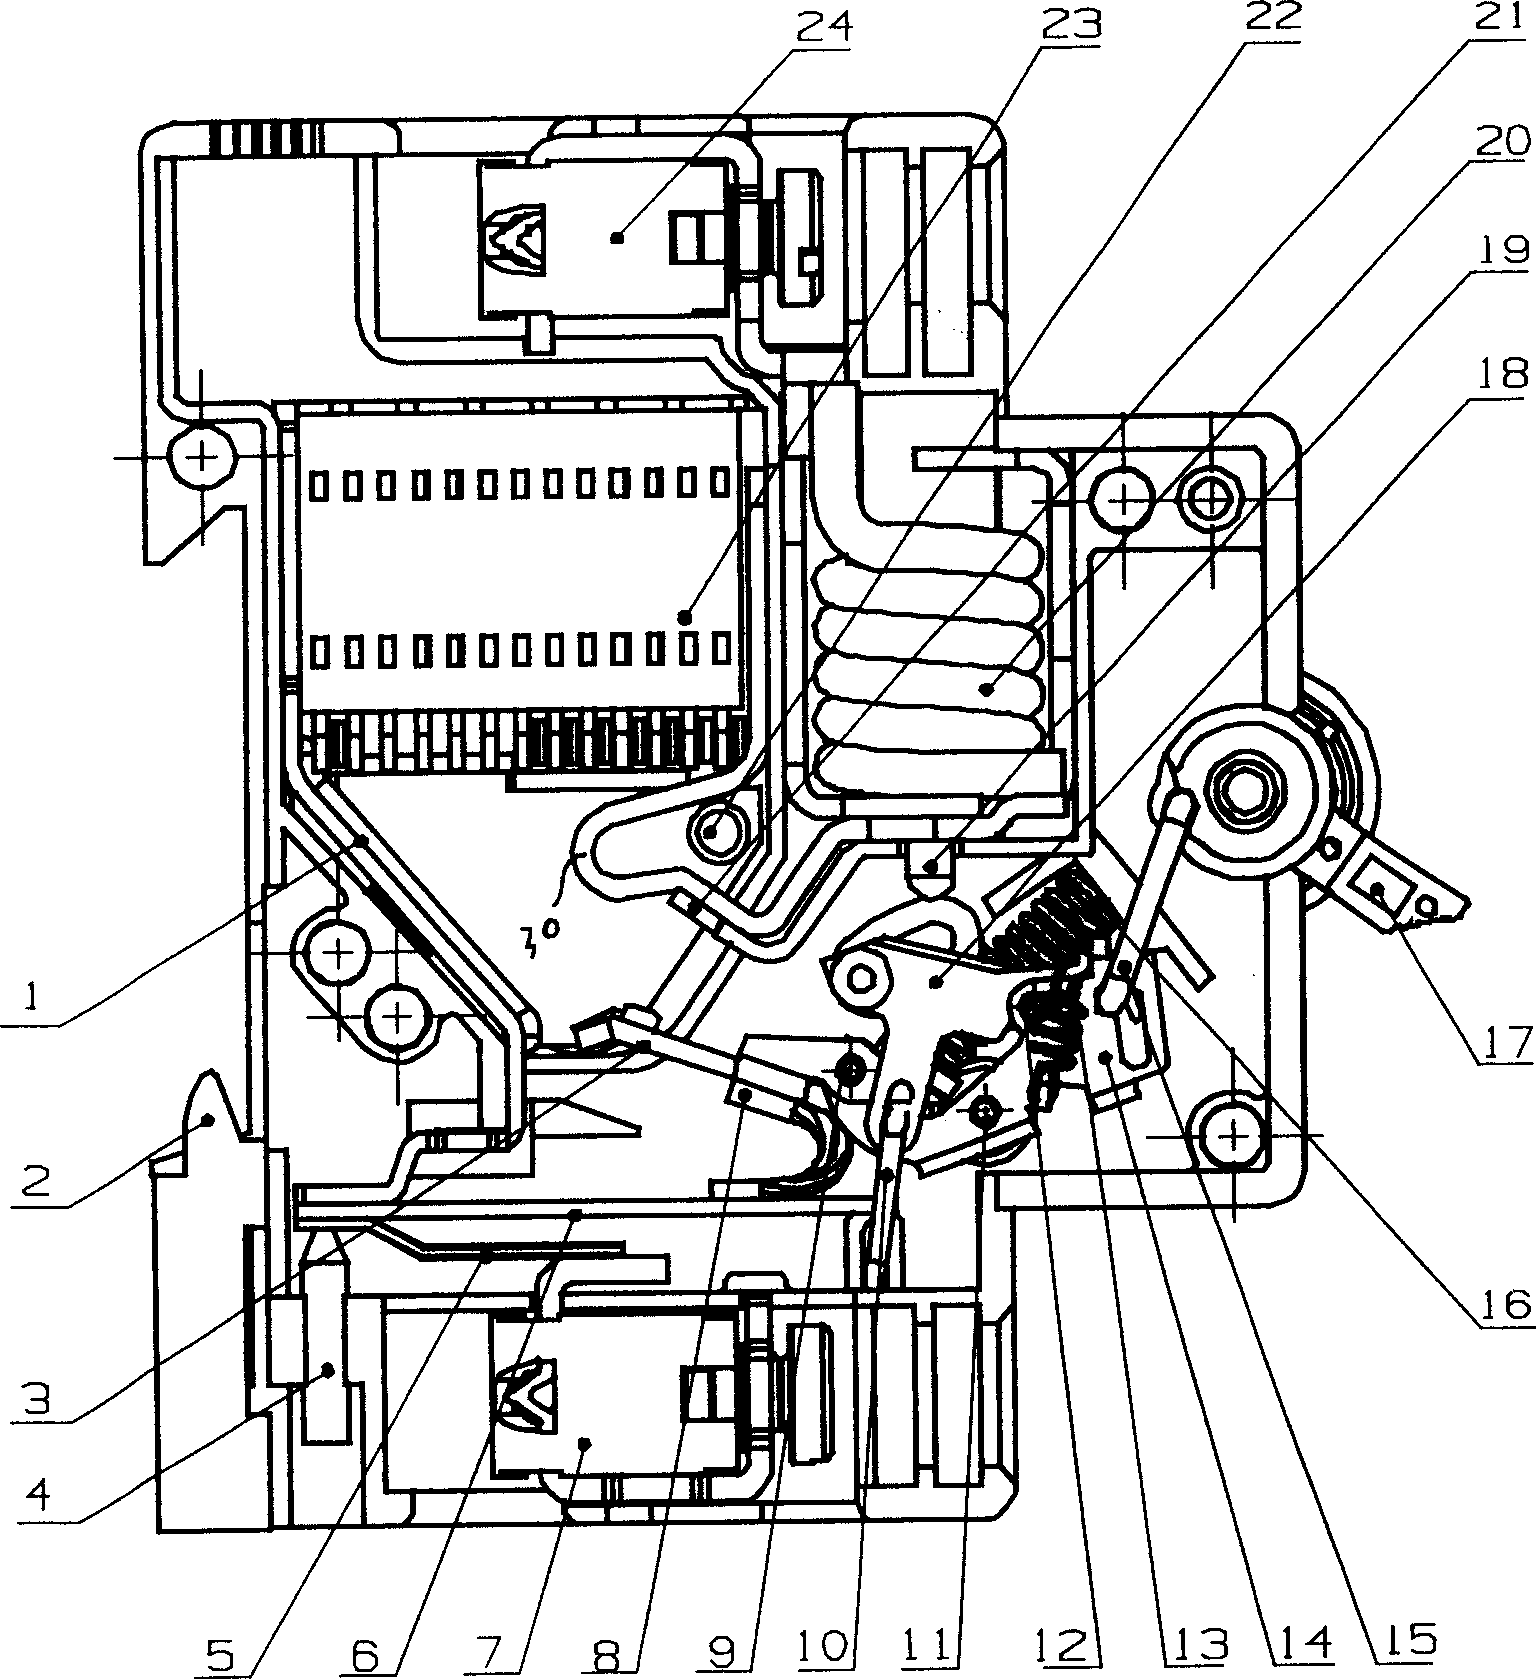 Small circuit breaker